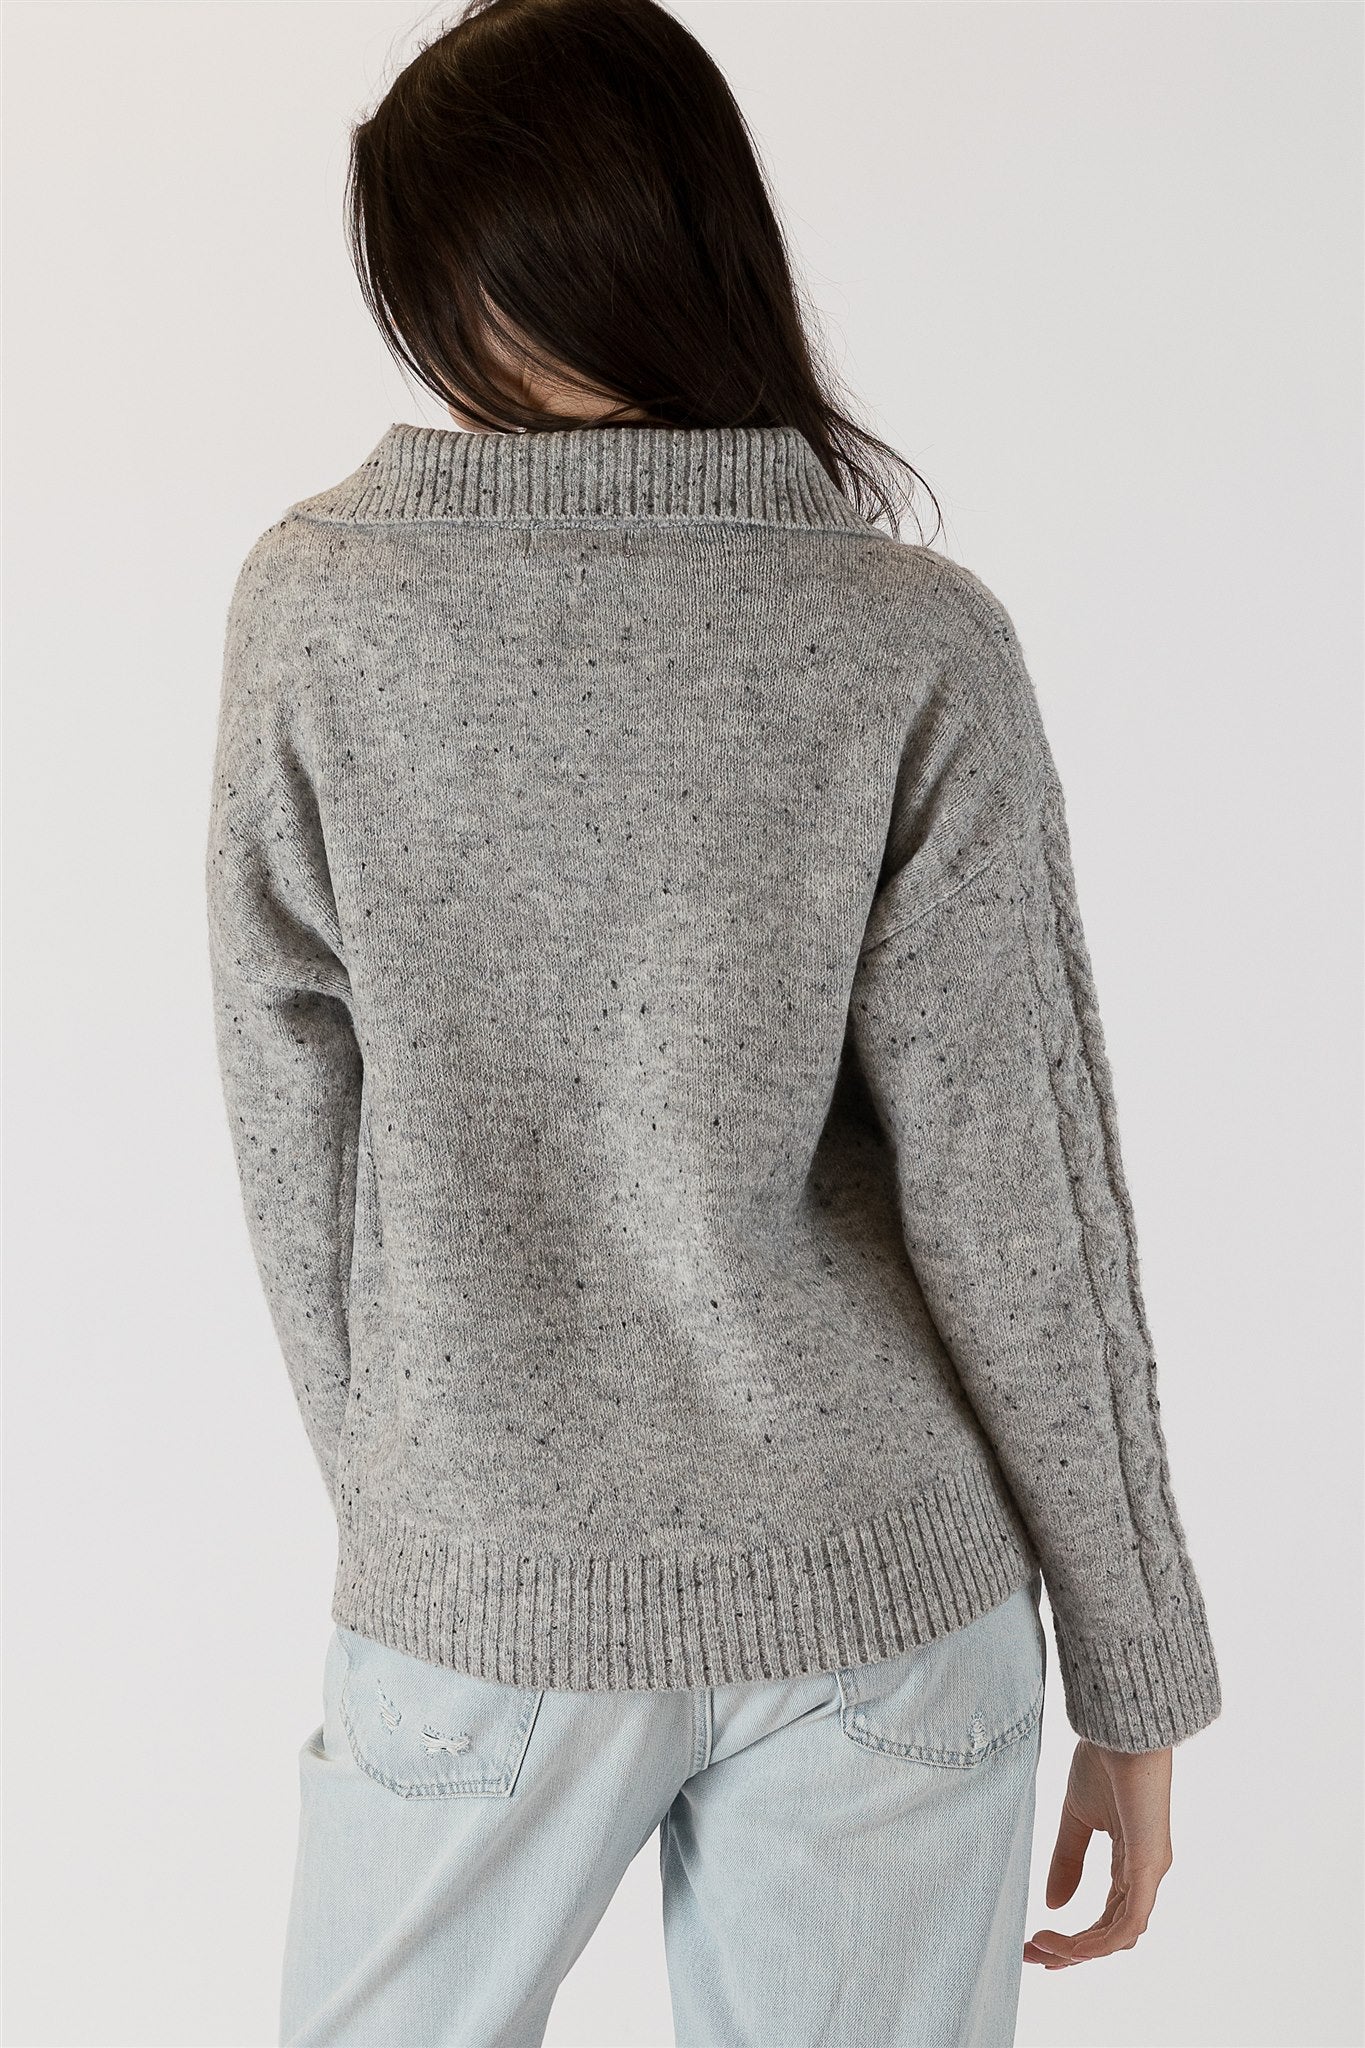 Lyla+Luxe Top - 3/4 Zip Sweater - Grey